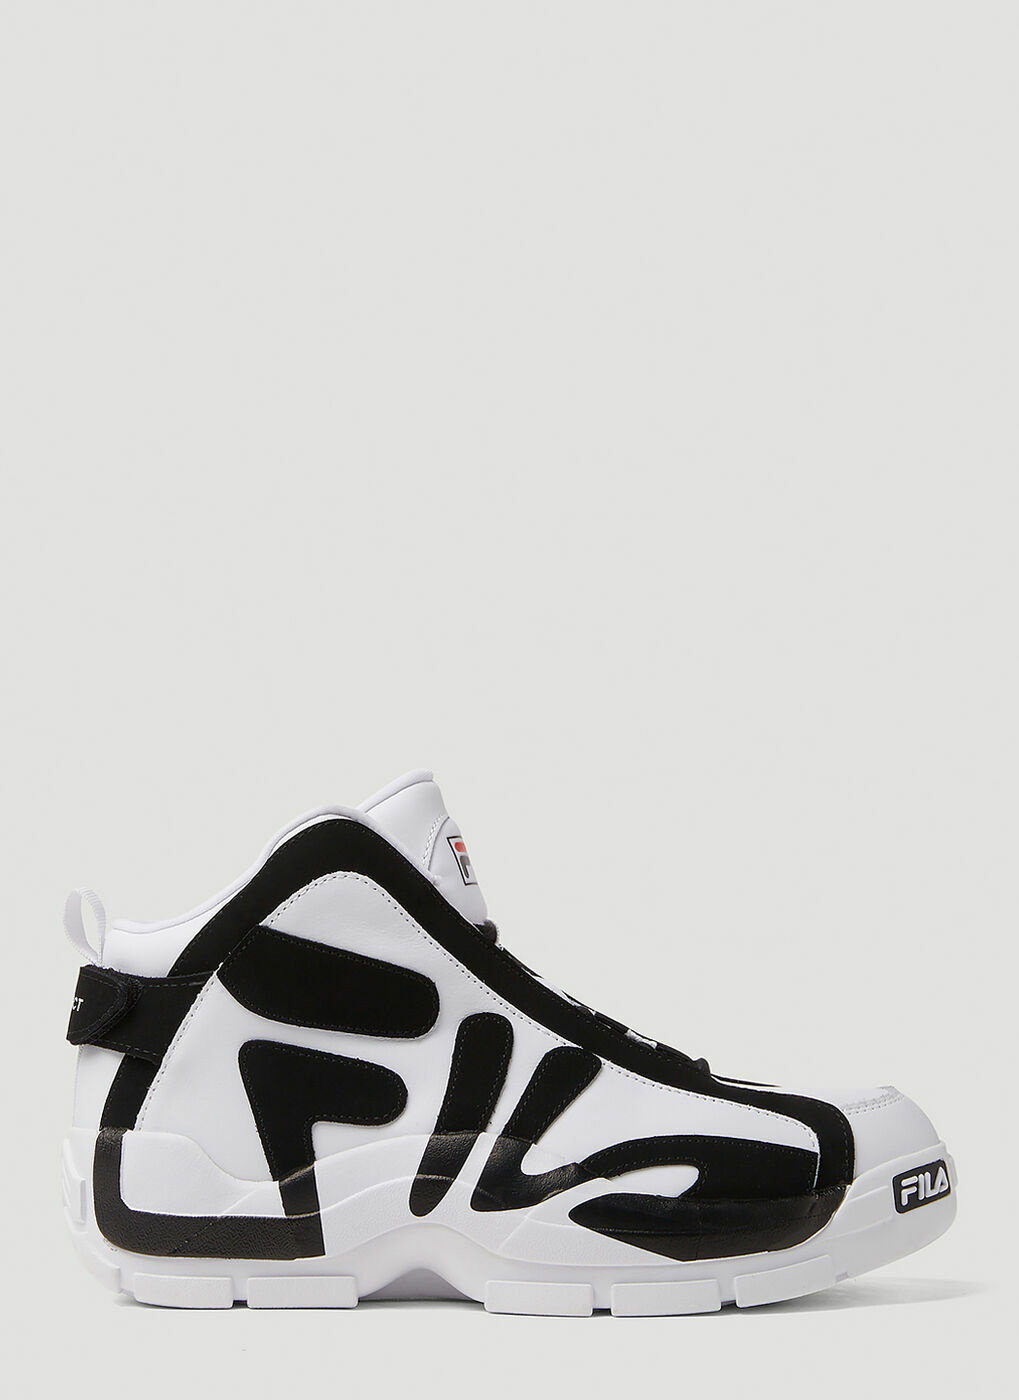 Grant Hill Sneakers White Y/Project x FILA